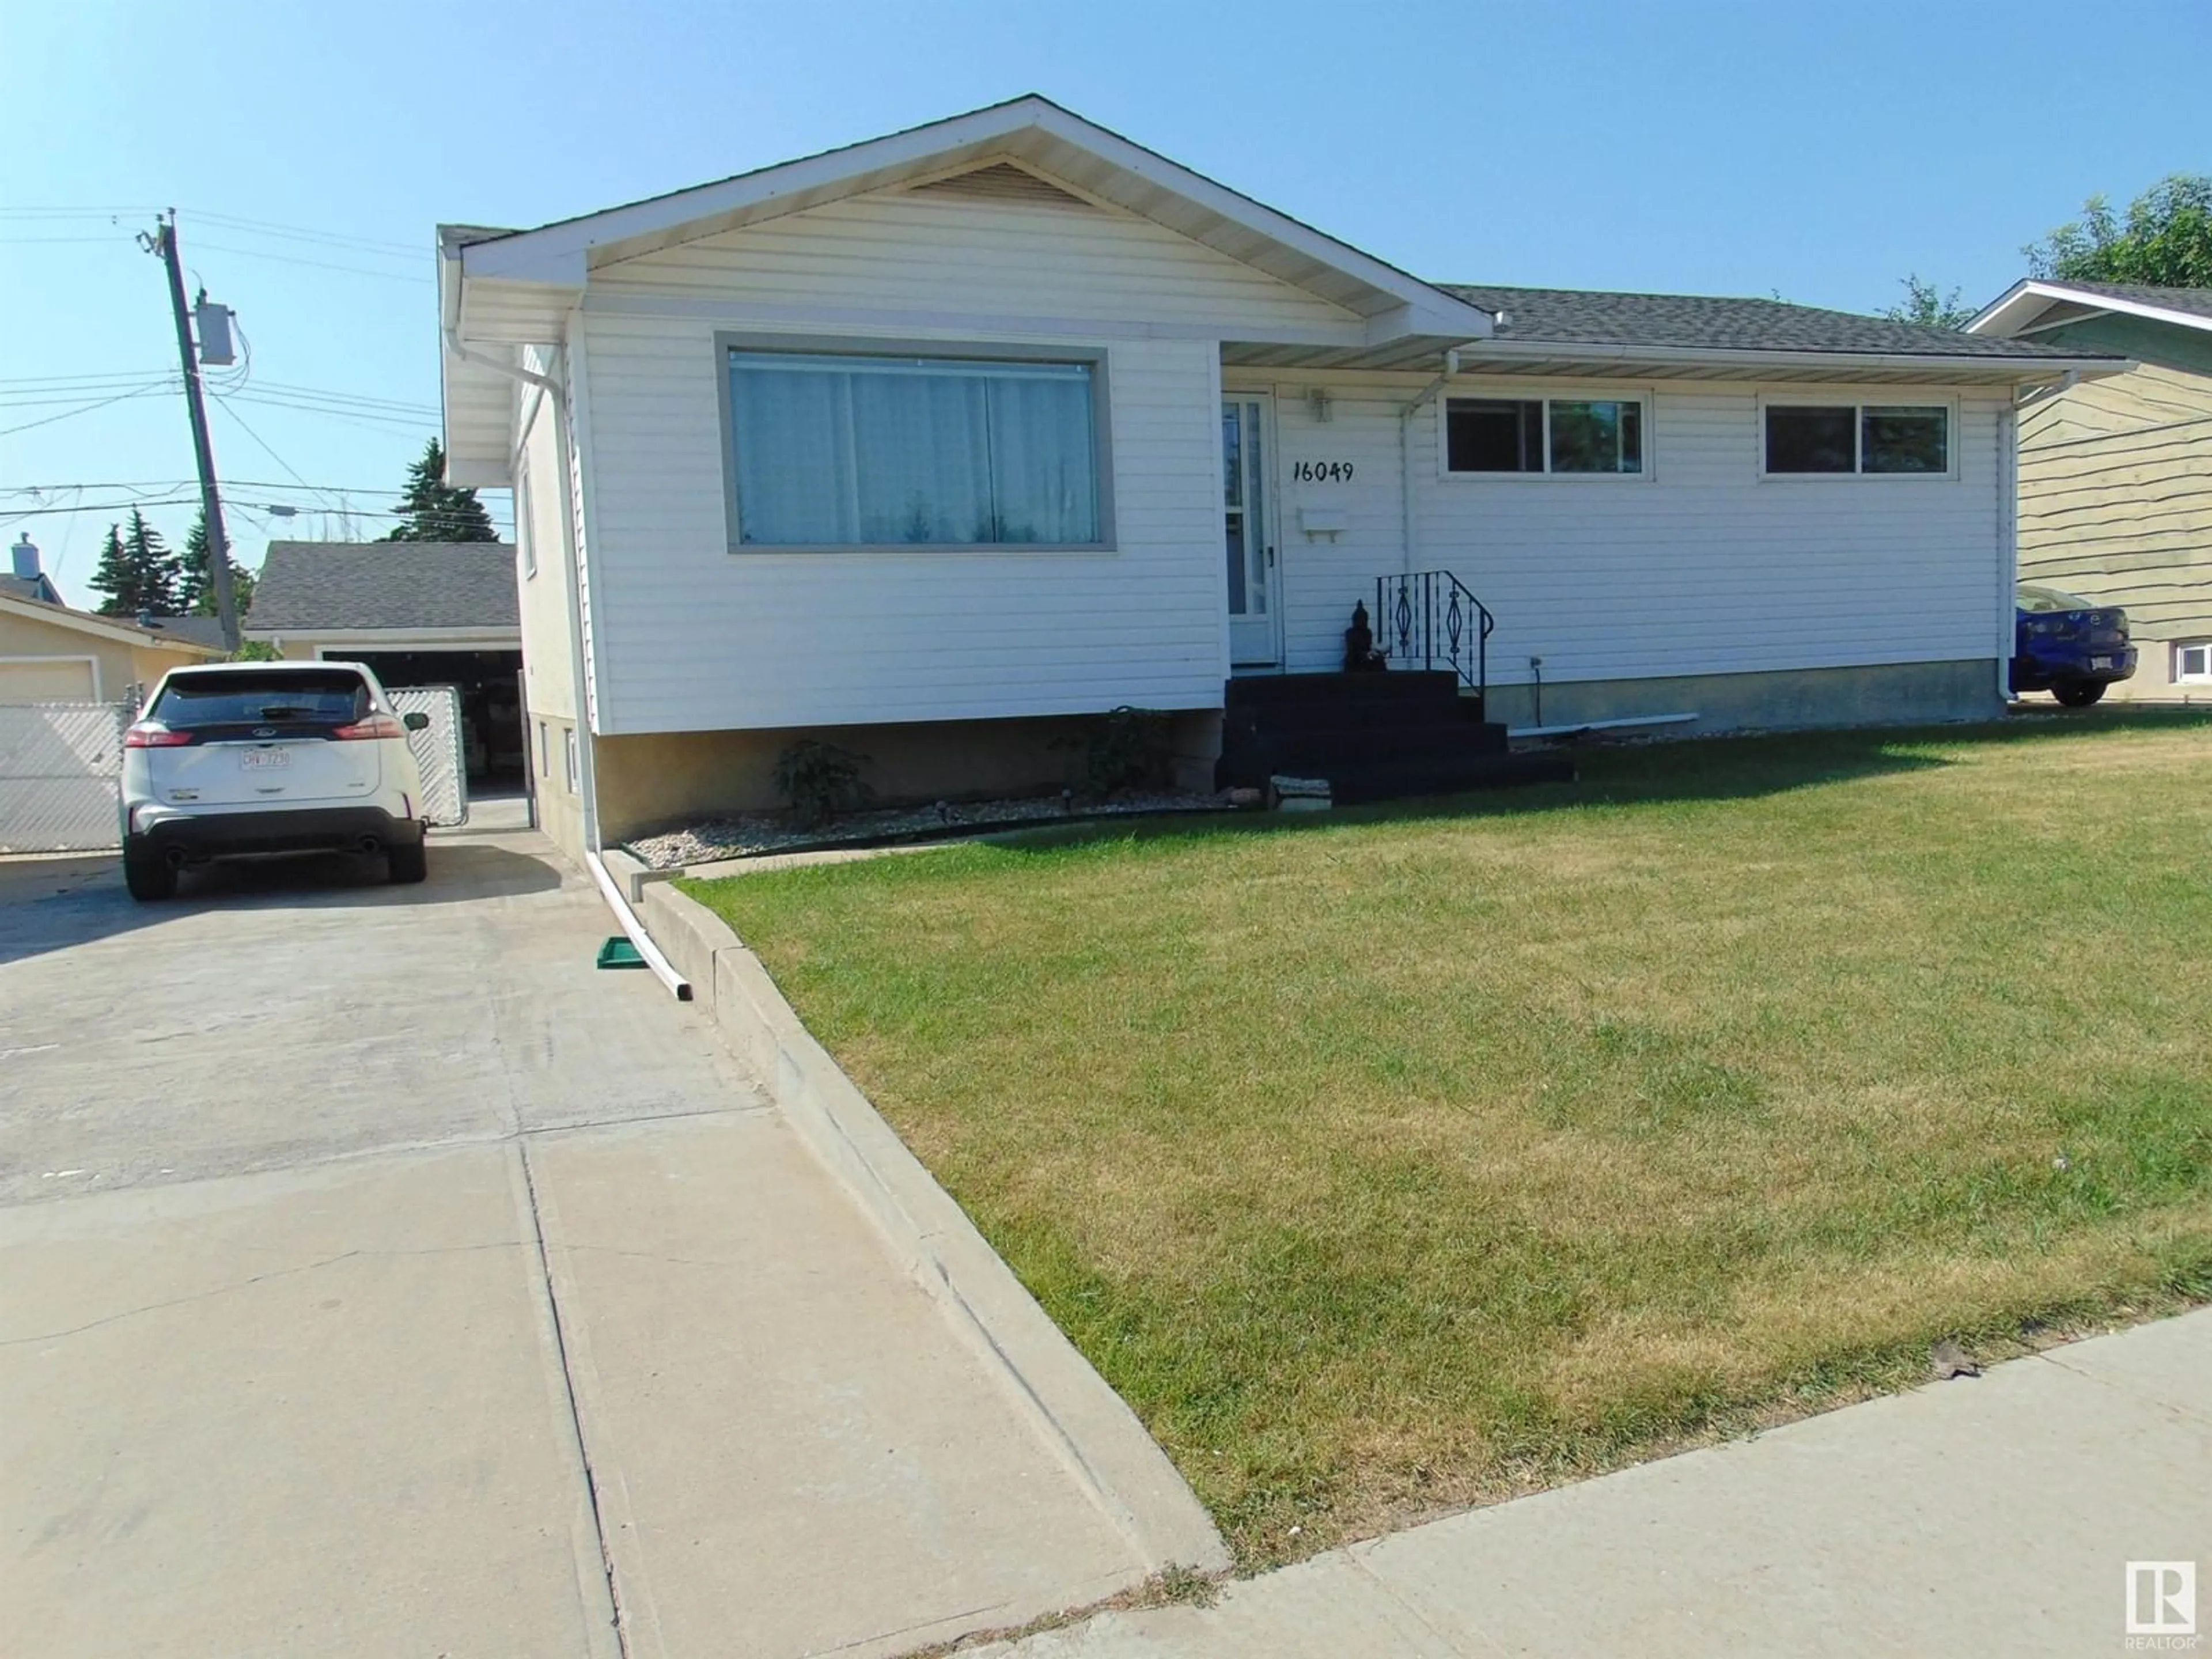 Frontside or backside of a home for 16049 95 AV NW, Edmonton Alberta T5P0A8